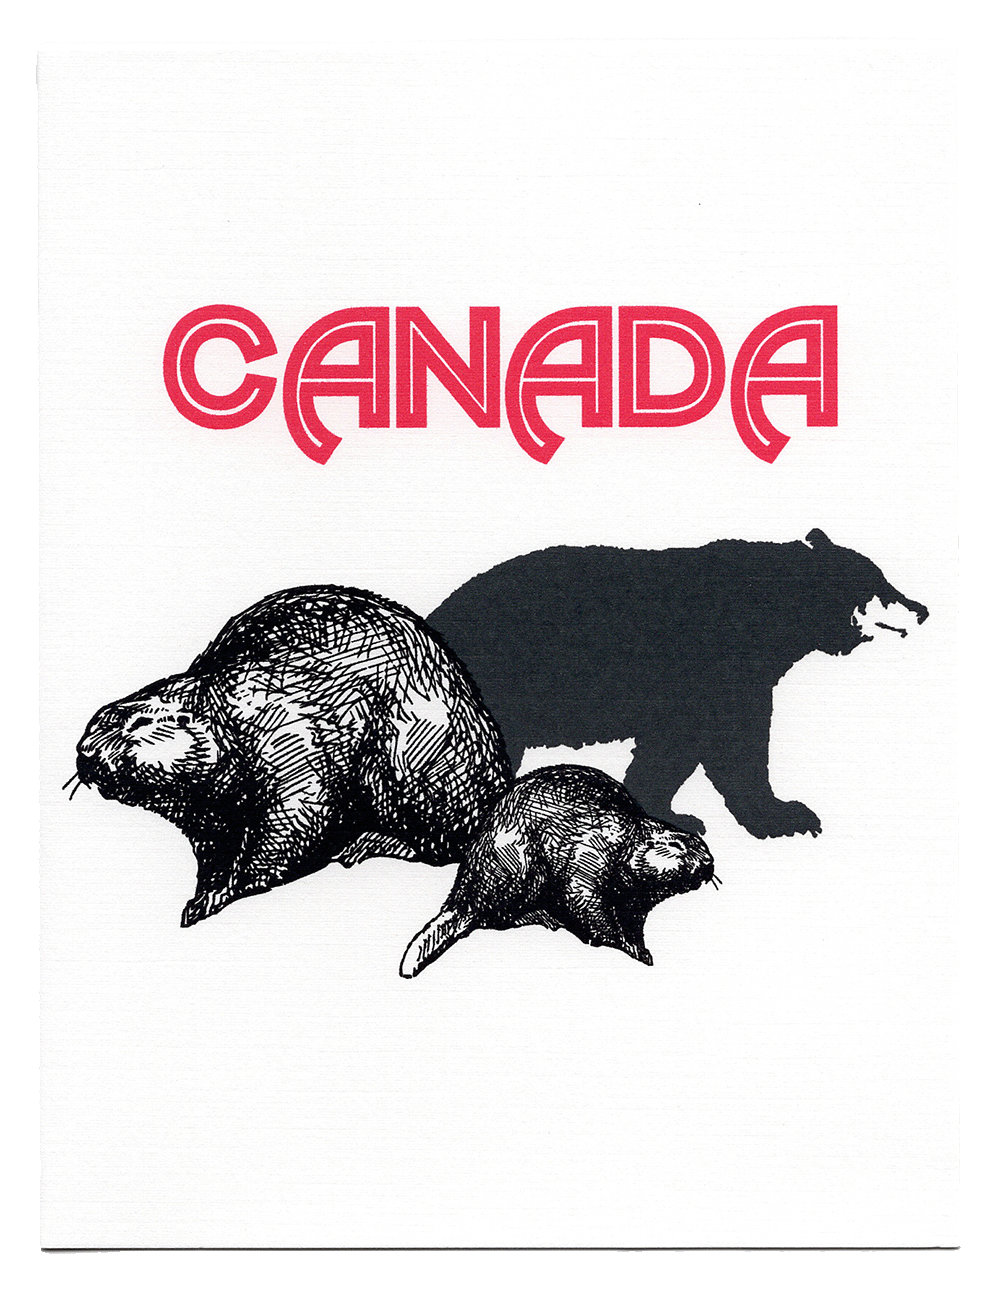 Canadian beaver greeting card